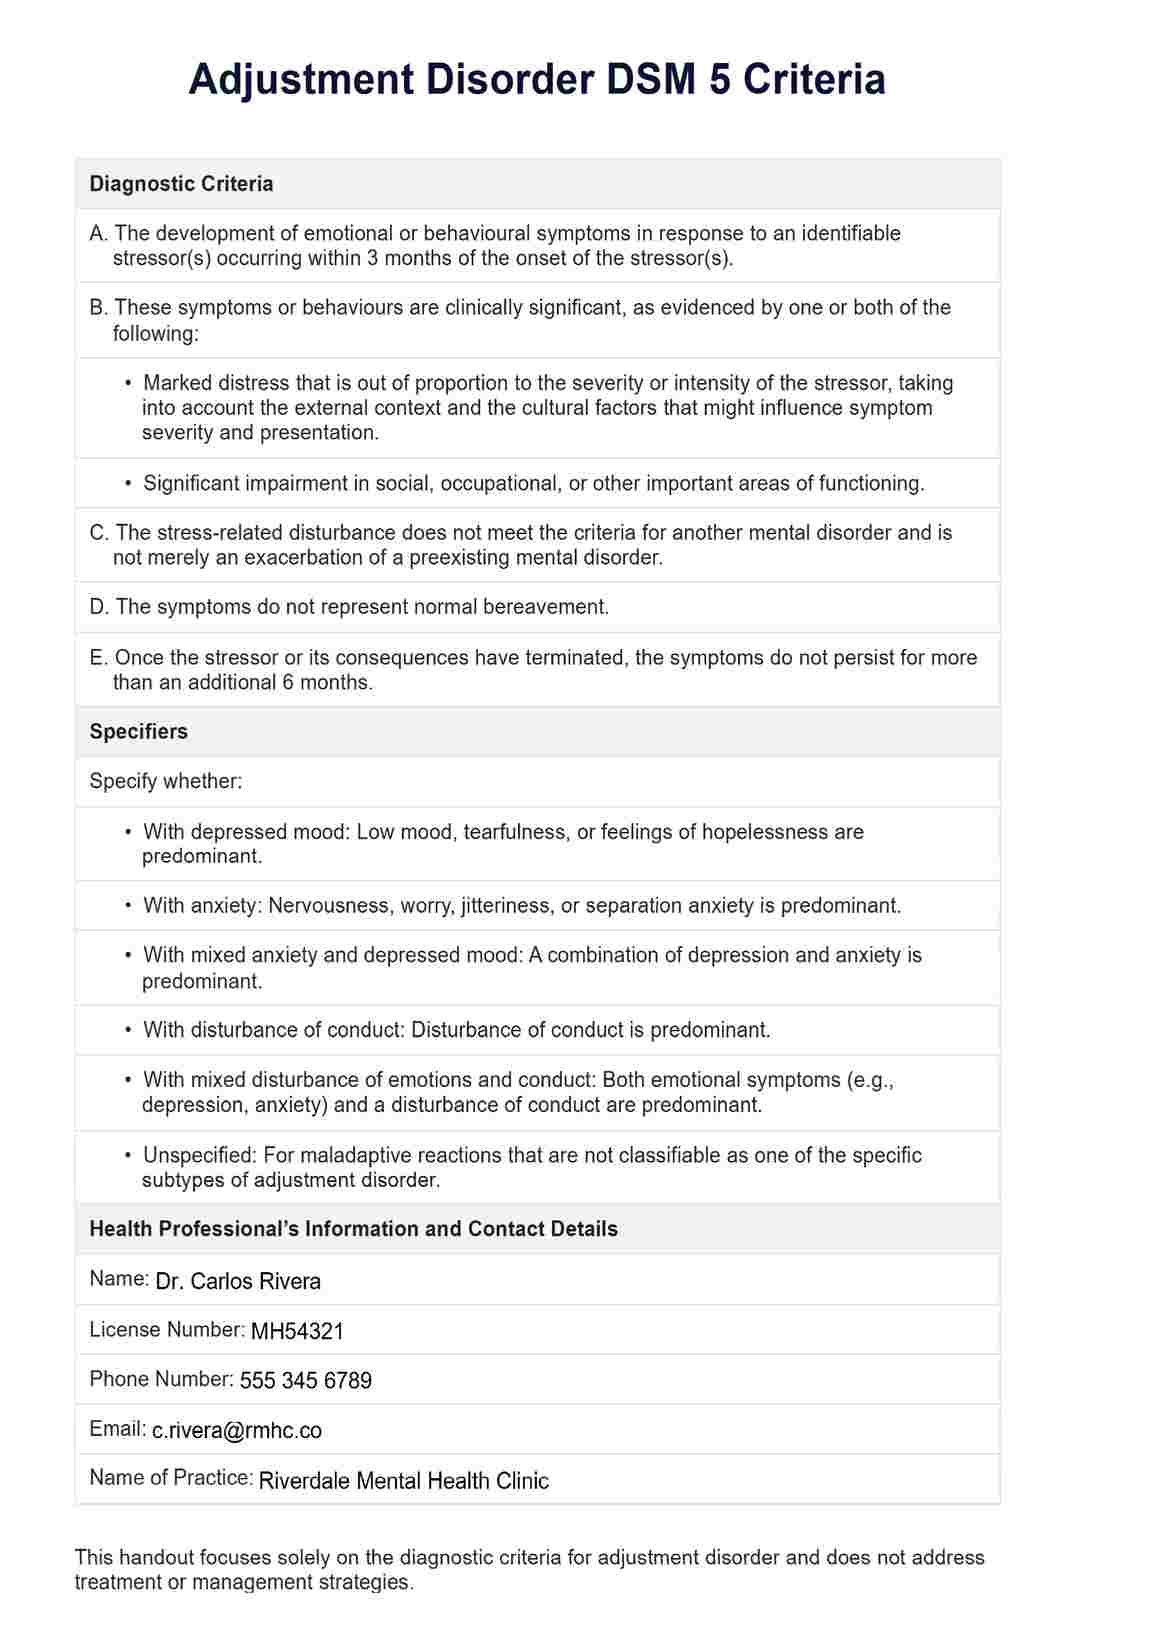 Adjustment Disorder DSM 5 Criteria PDF Example